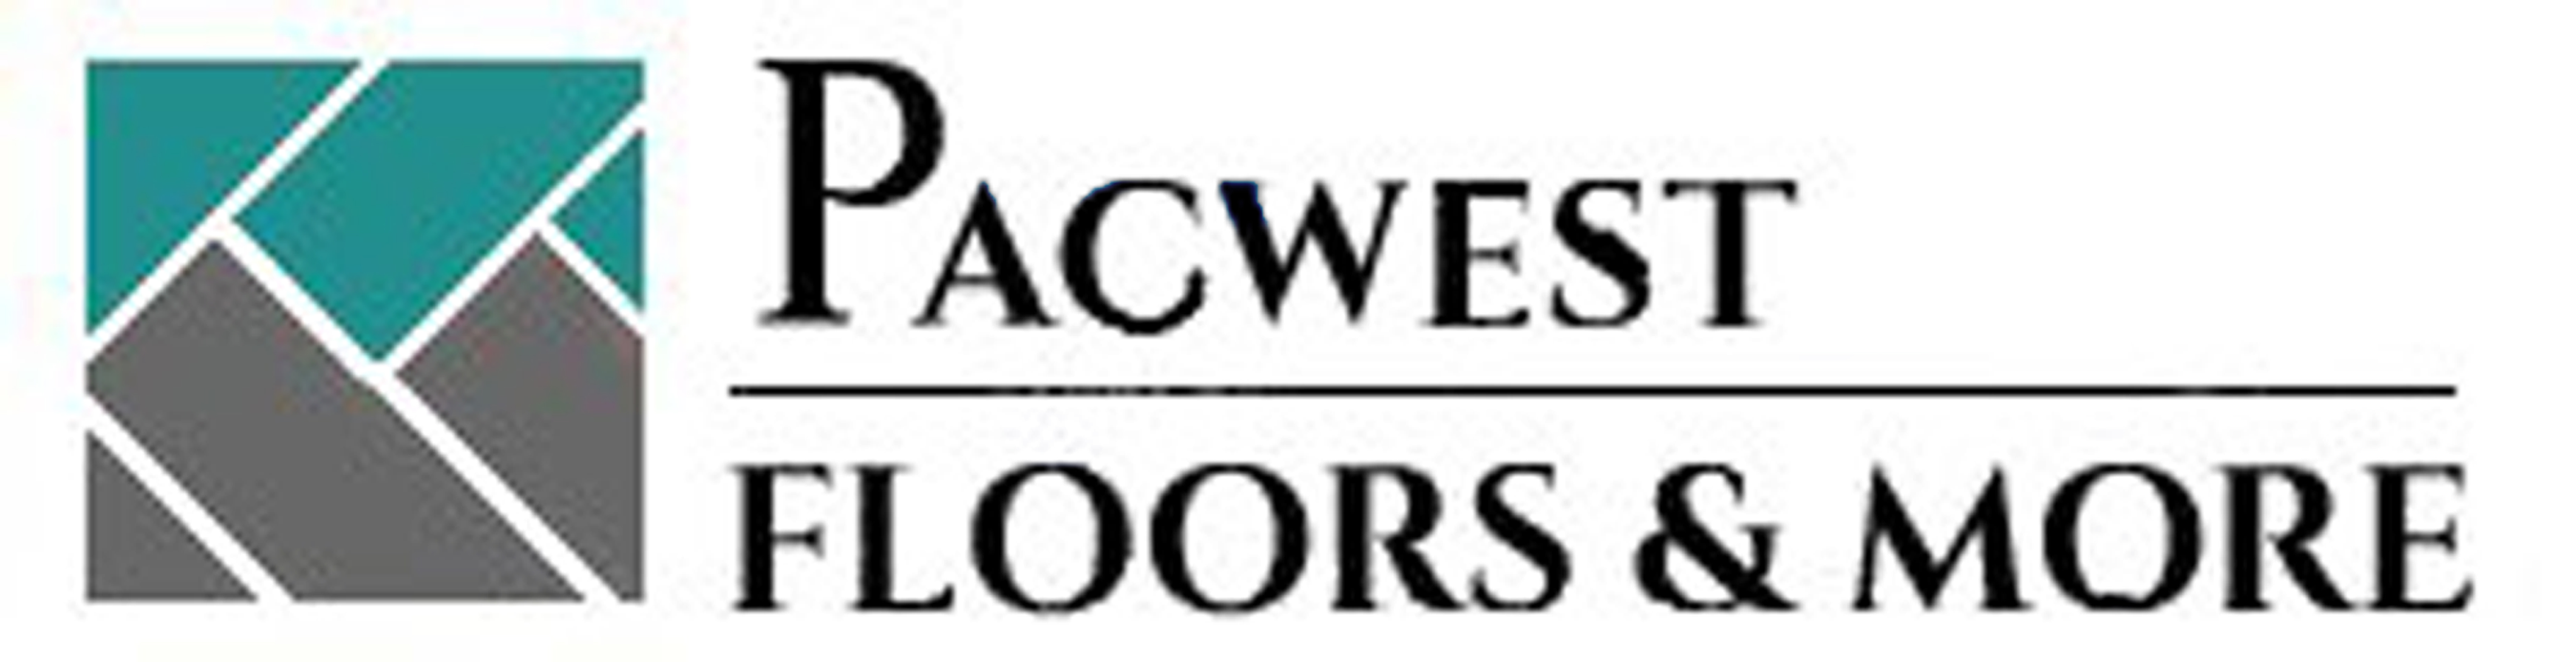 Pacwest Floors & More, Inc. Logo